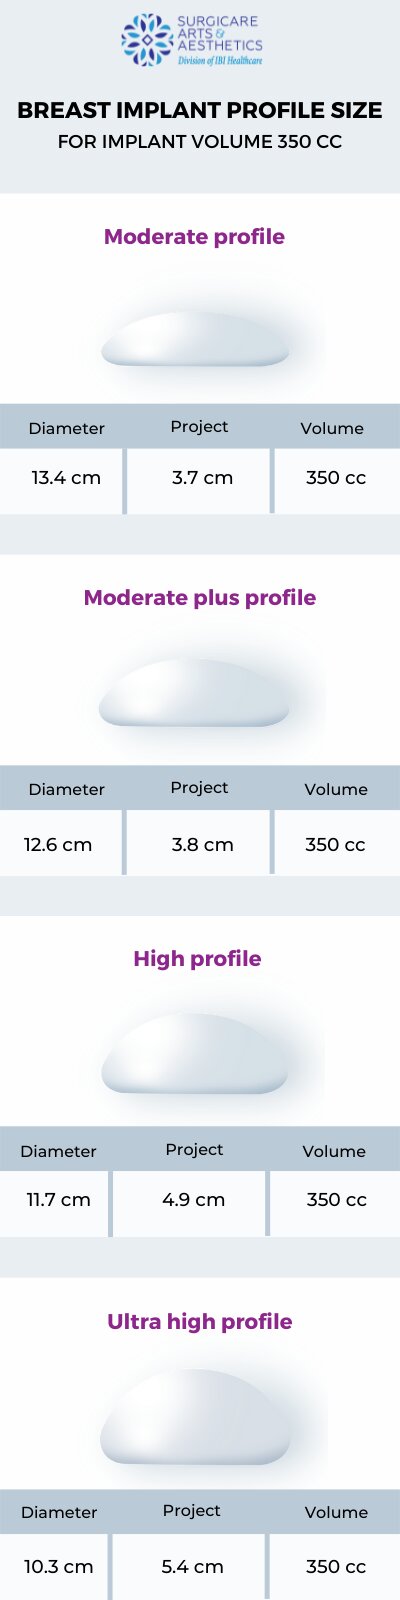 Breast implant profile sizes